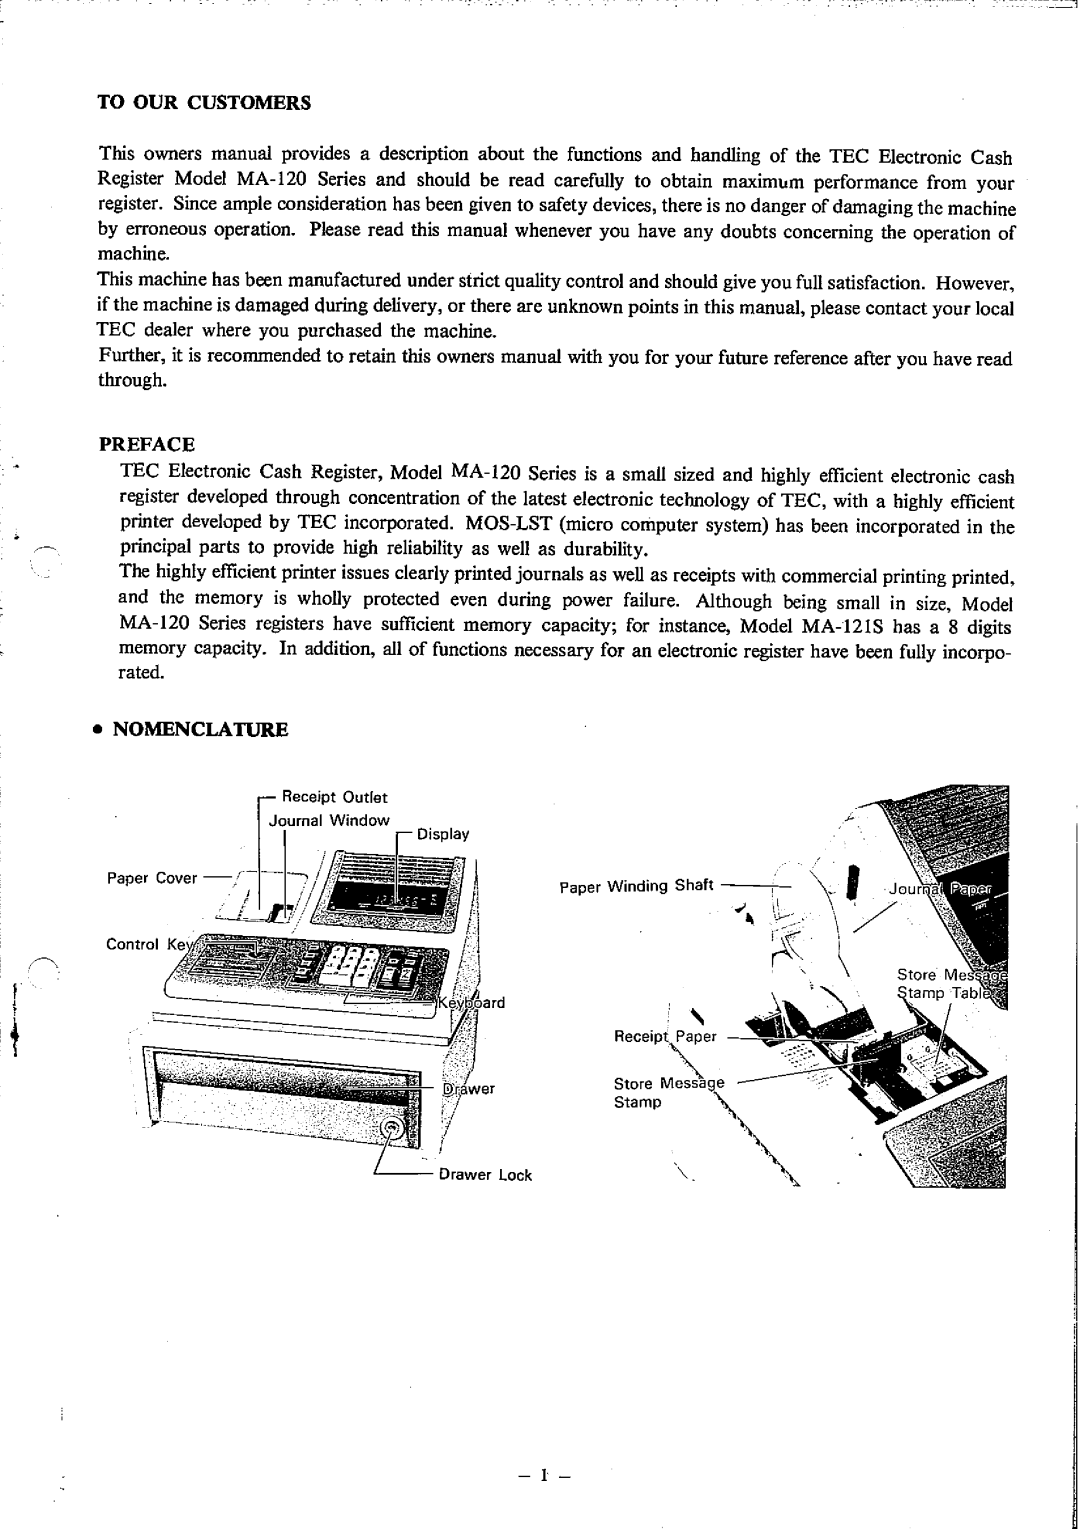 Toshiba MA-120 Series manual 